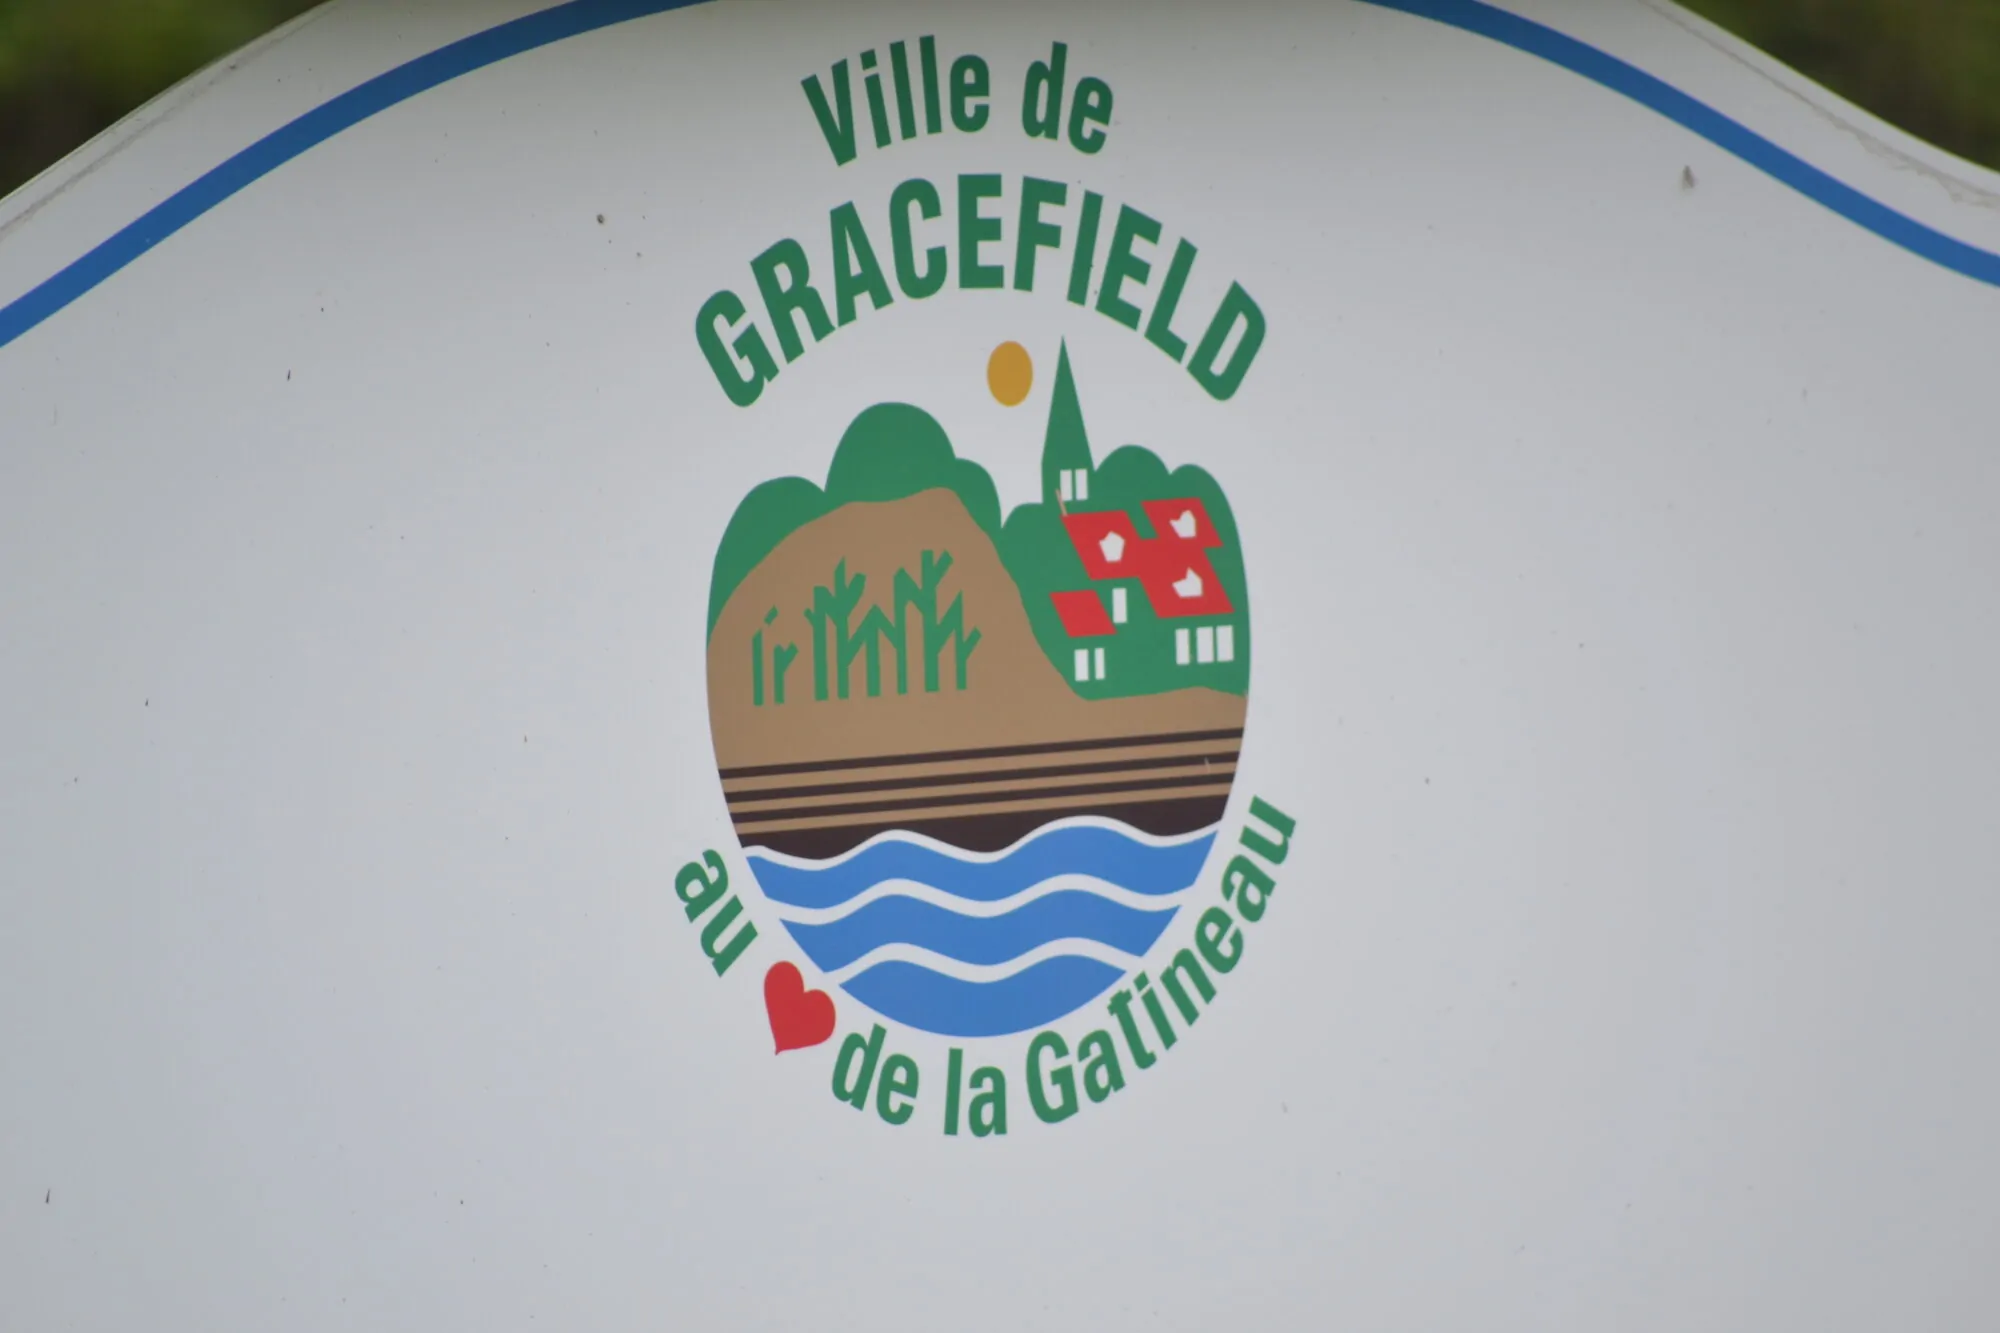 Gracefield